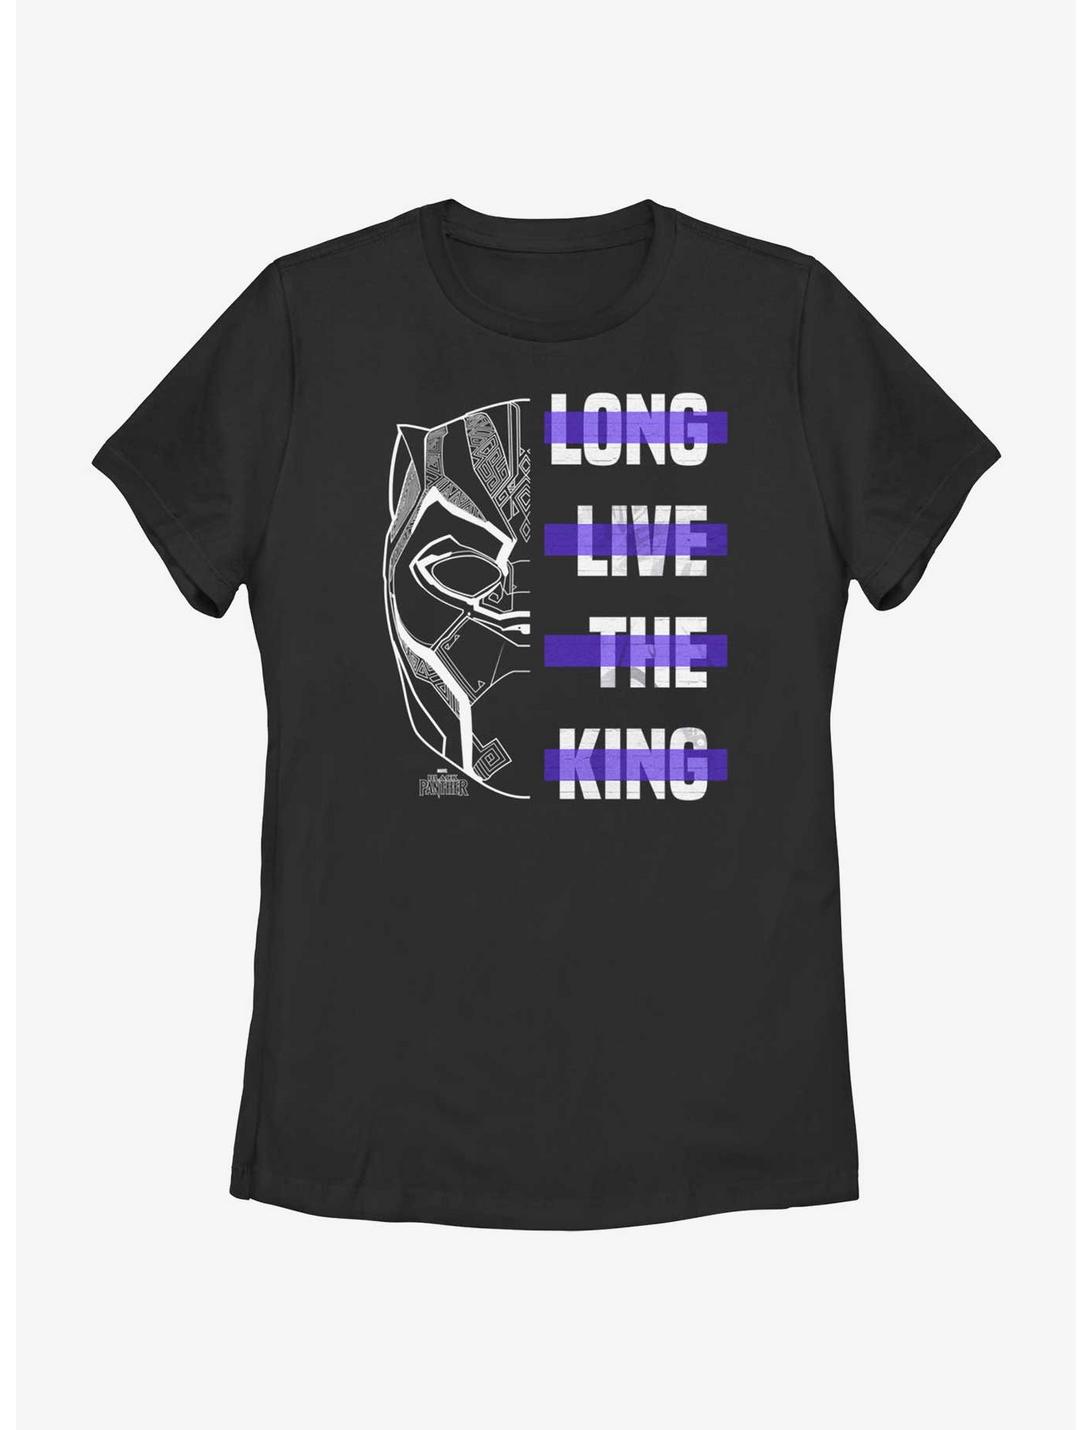 Marvel Black Panther Long Live The King Womens T-Shirt, BLACK, hi-res